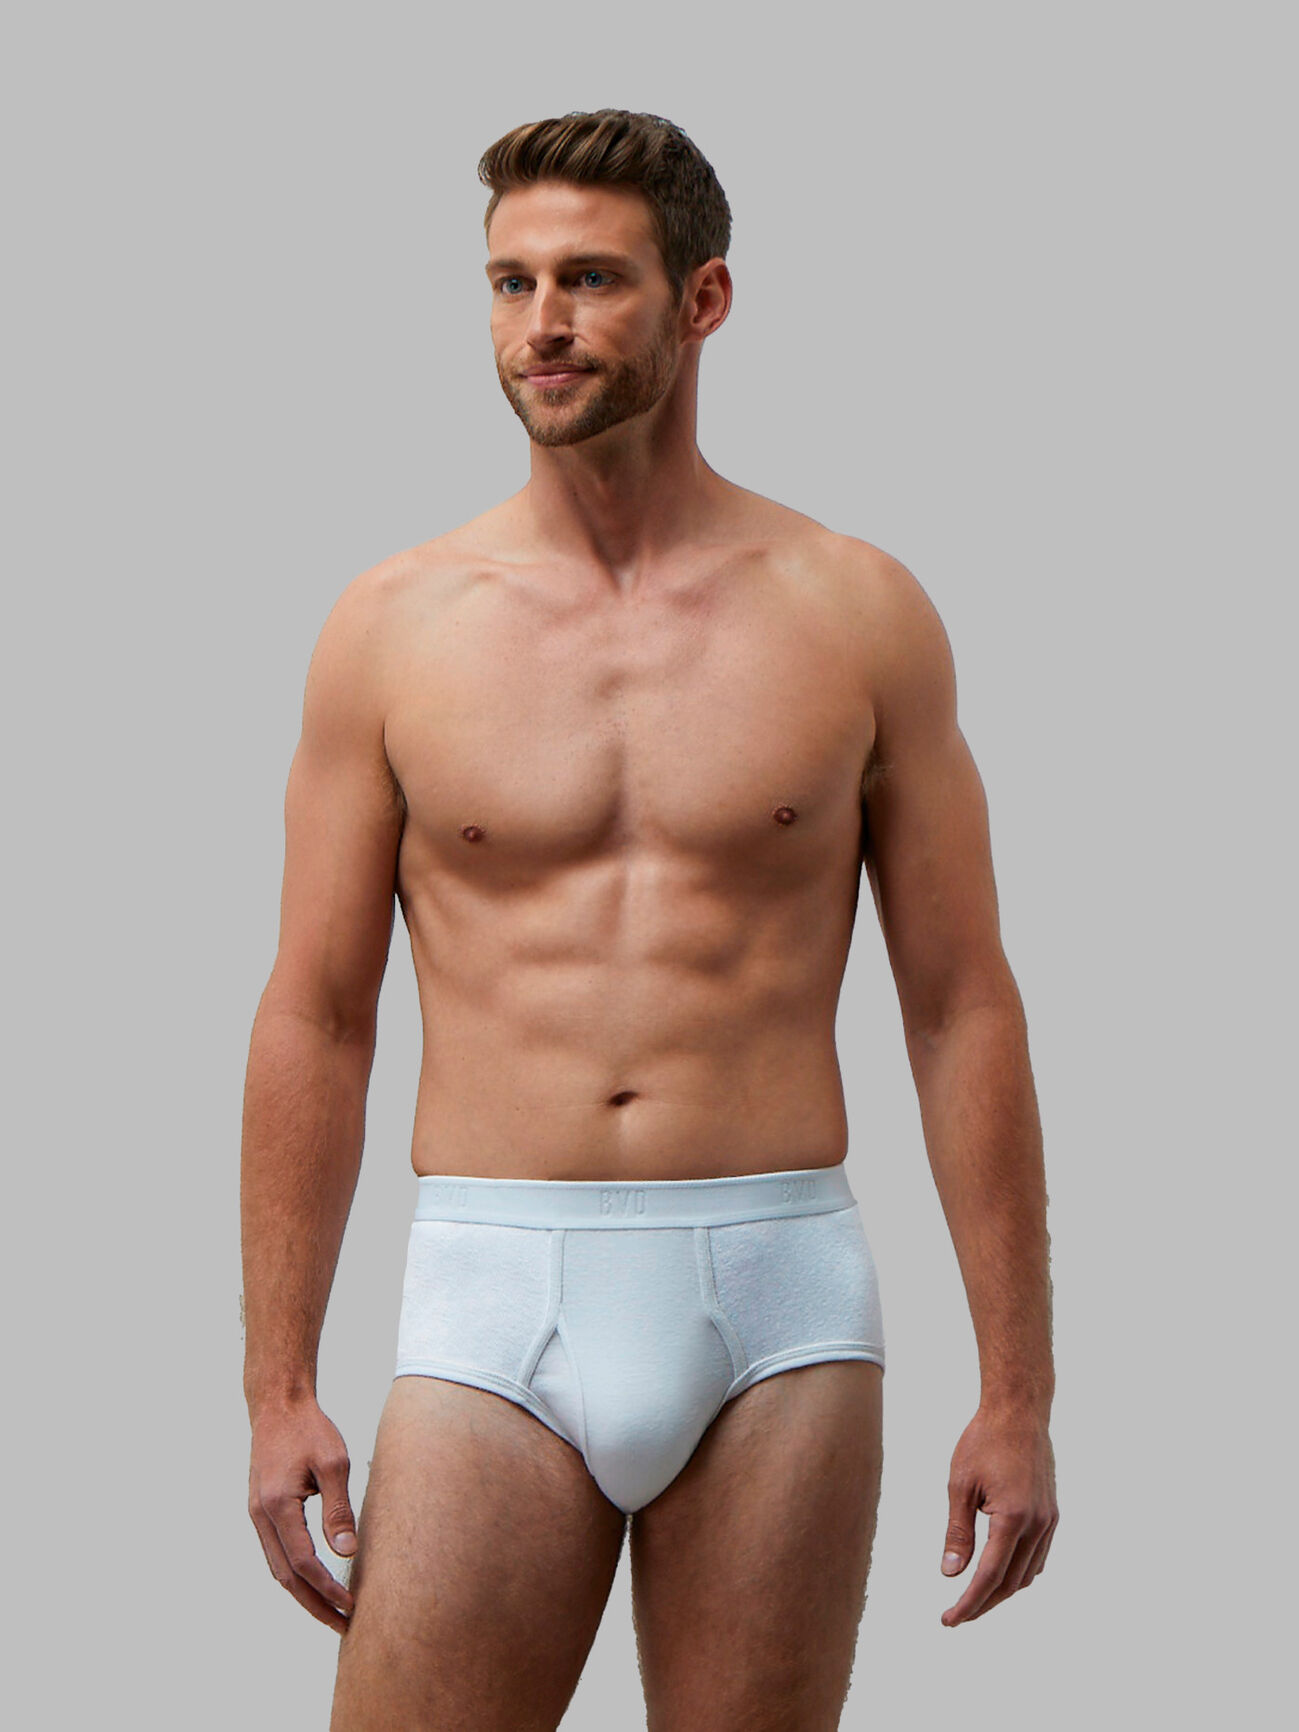 b.v.d. underwear - Buy b.v.d. underwear with free shipping on